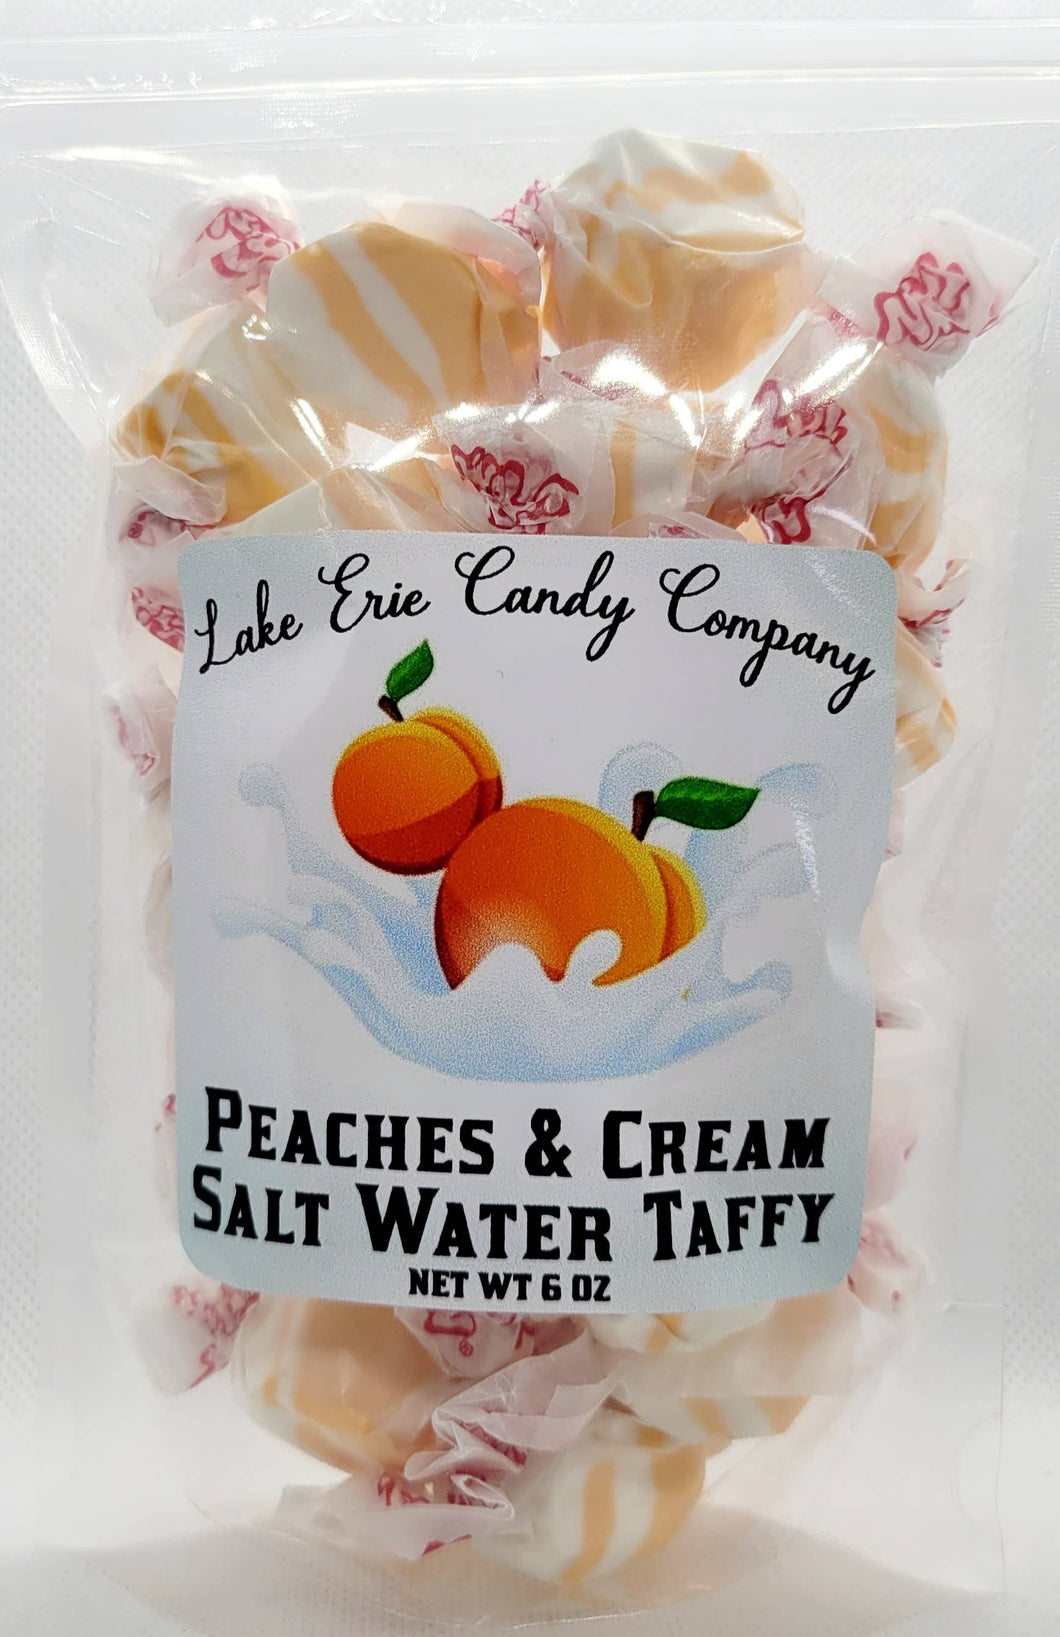 Lake Erie Candy Company - Peaches & Cream Salt Water Taffy